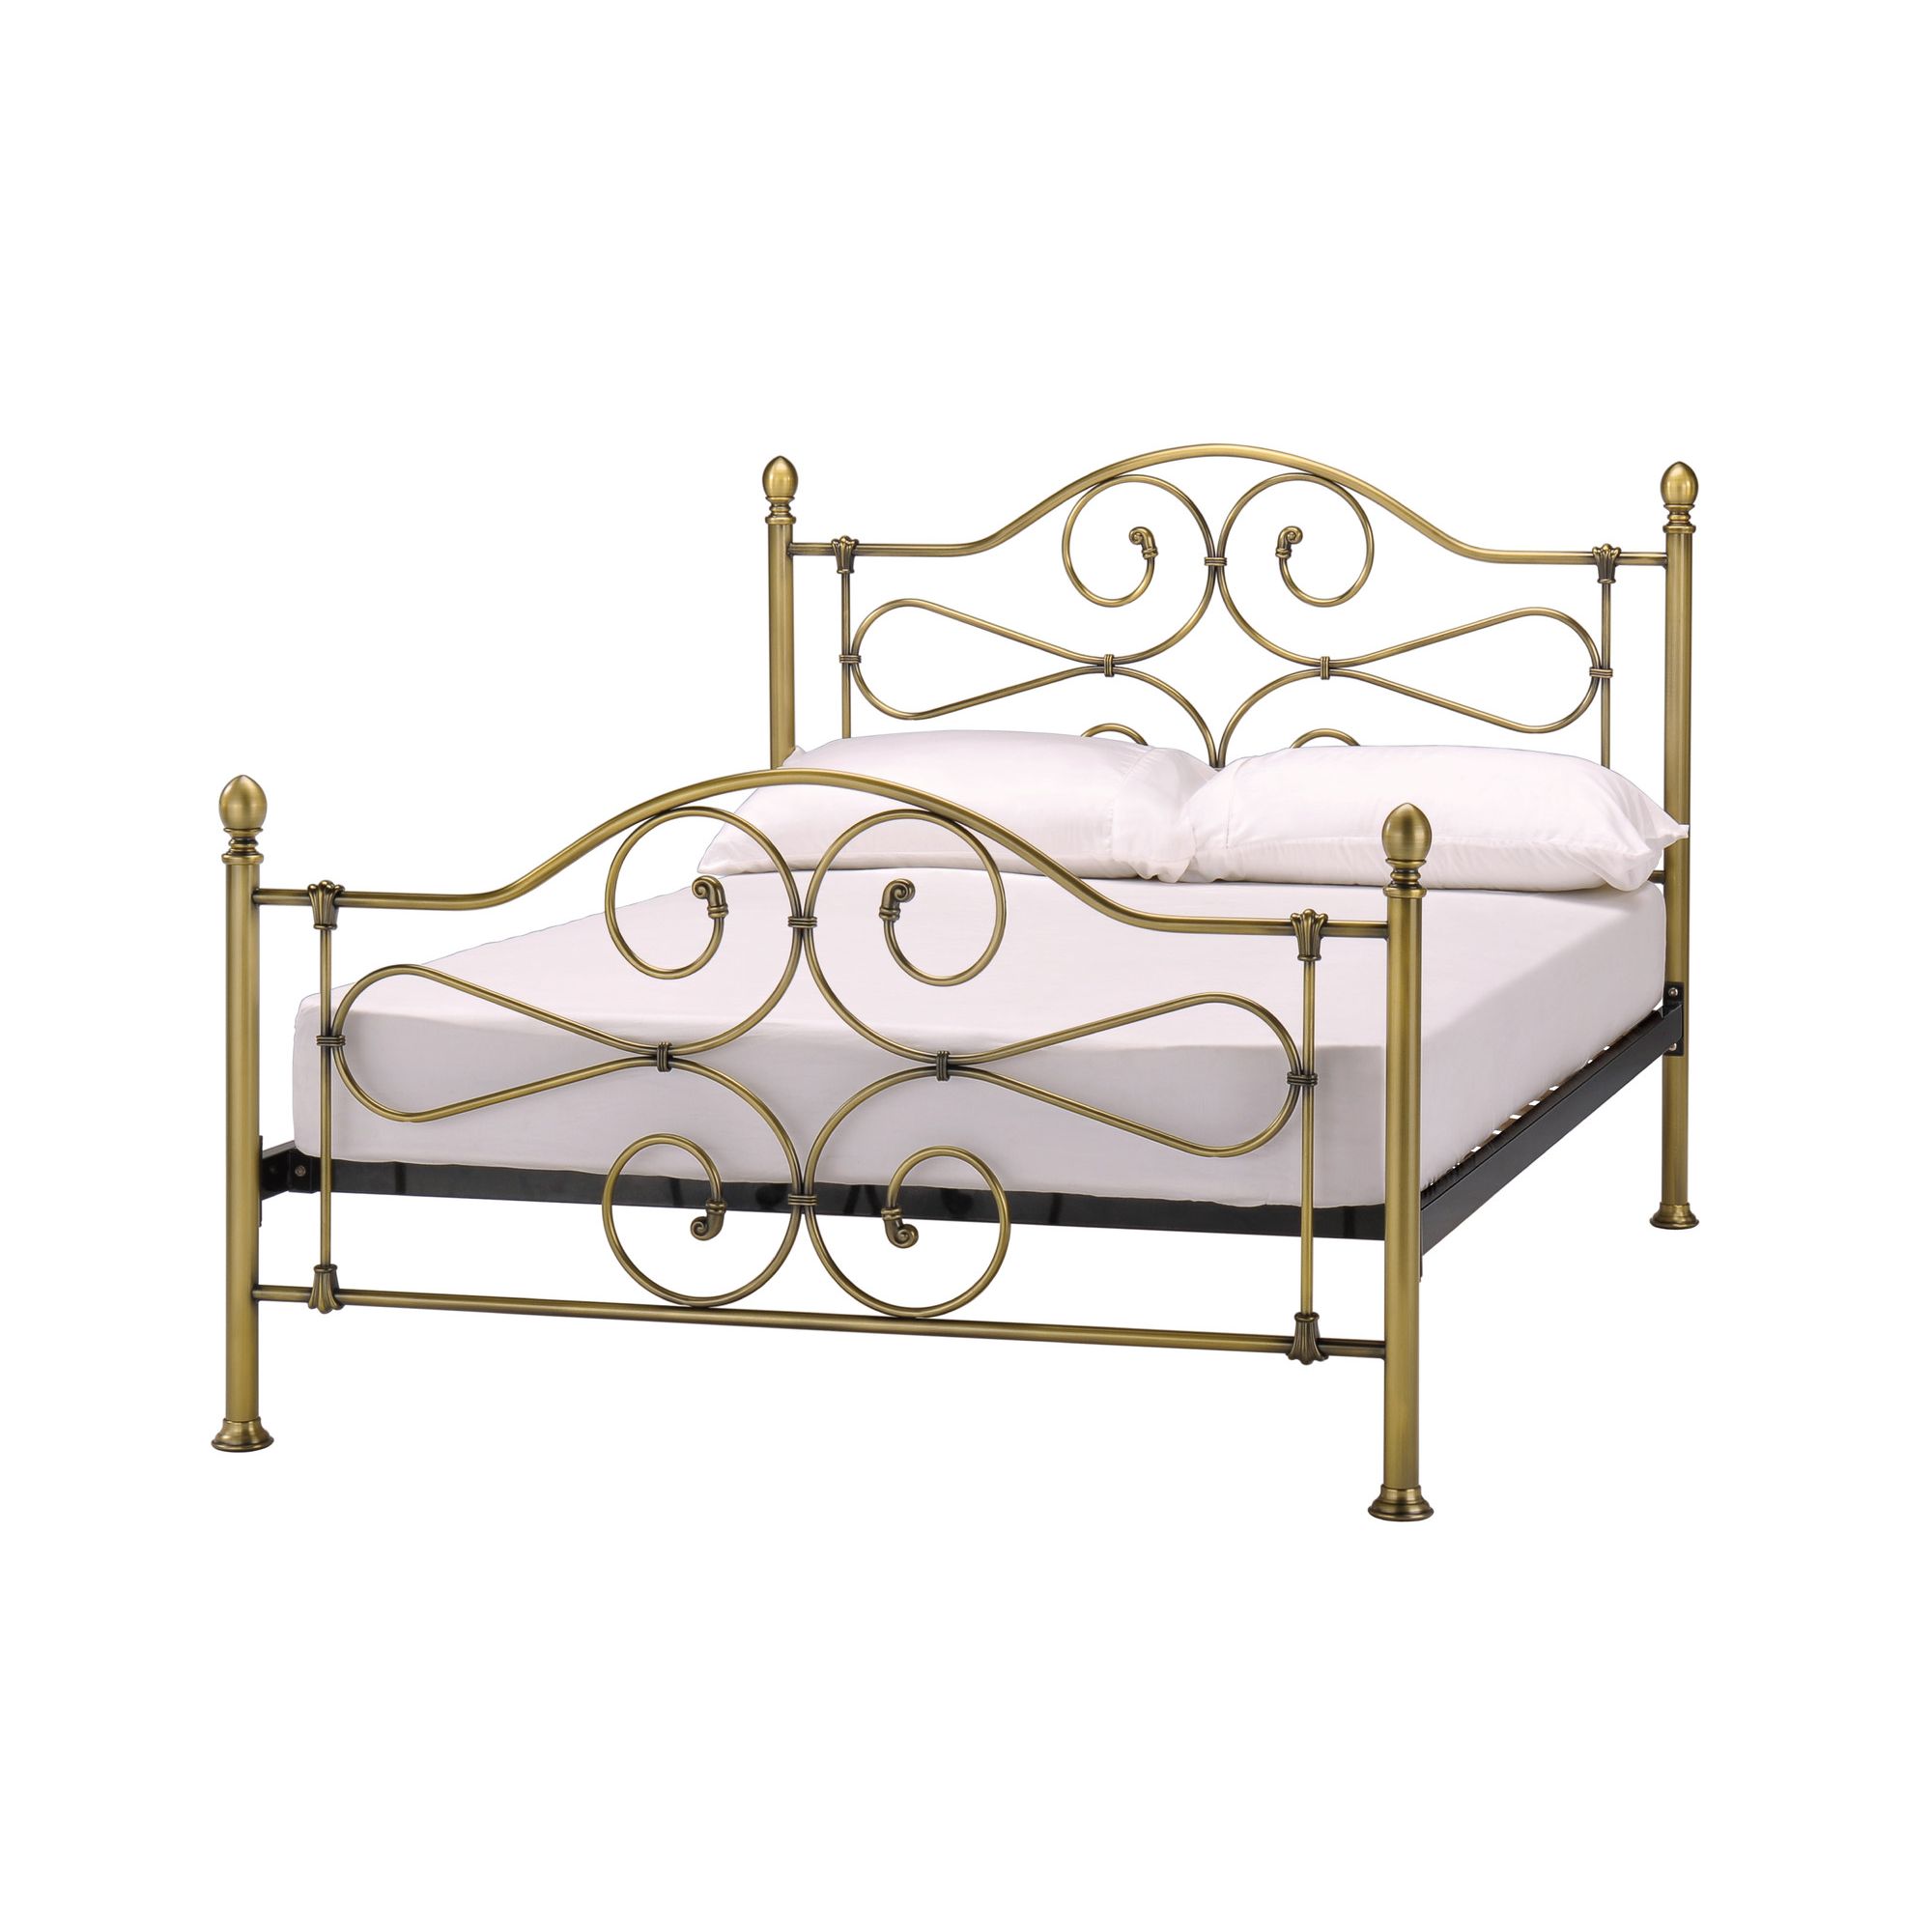 Serene Furnishings Florence Bed Frame - King at Tesco Direct